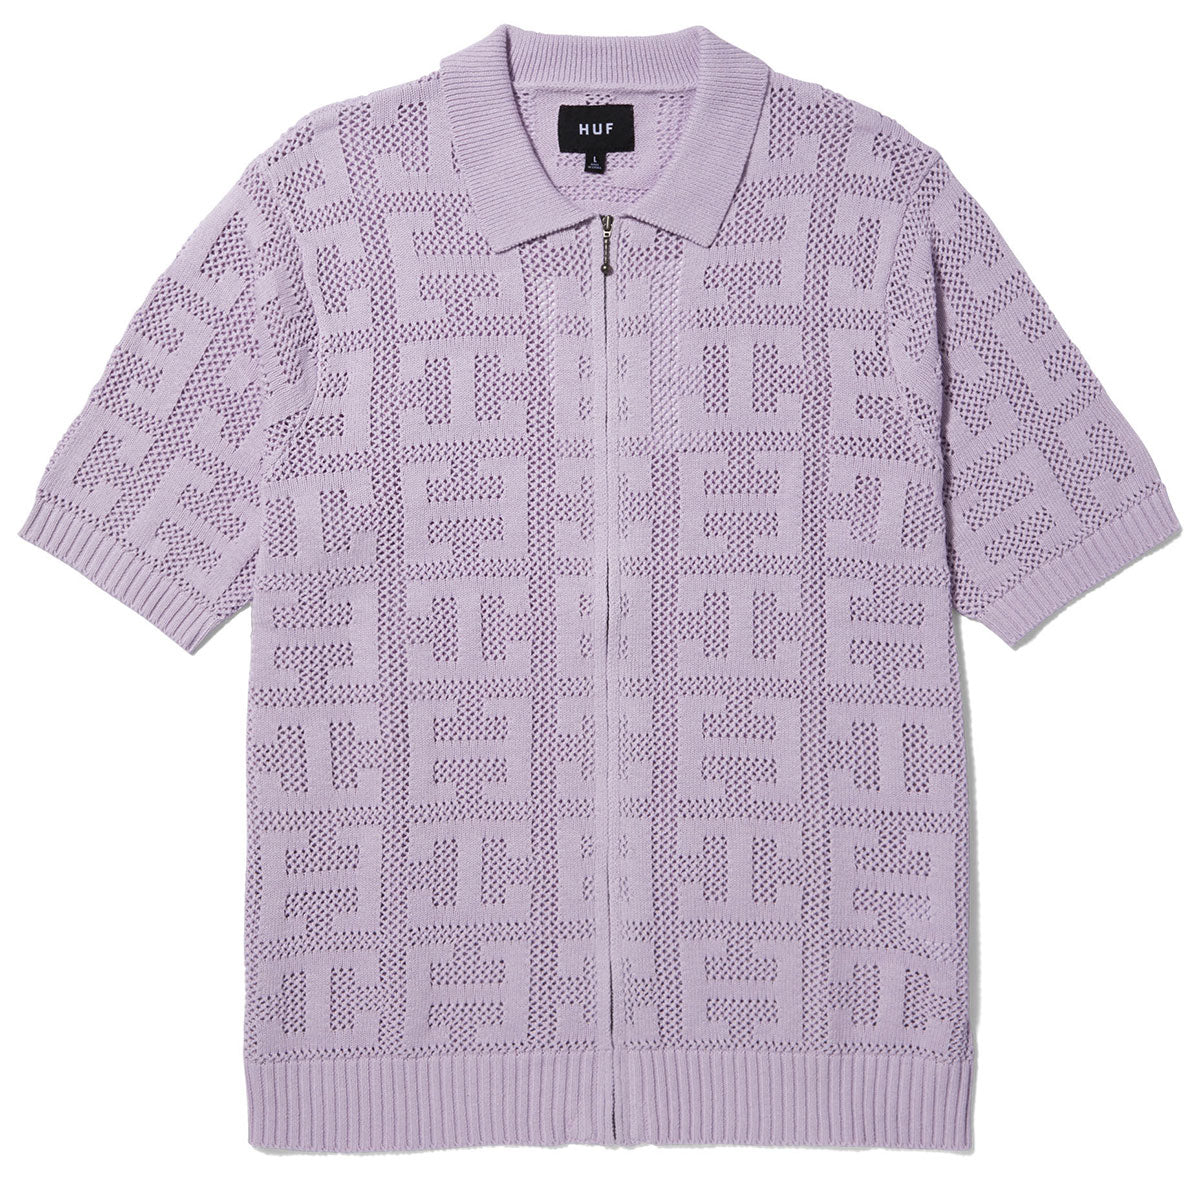 HUF Monogram Jacquard Zip Sweater - Lavender image 1